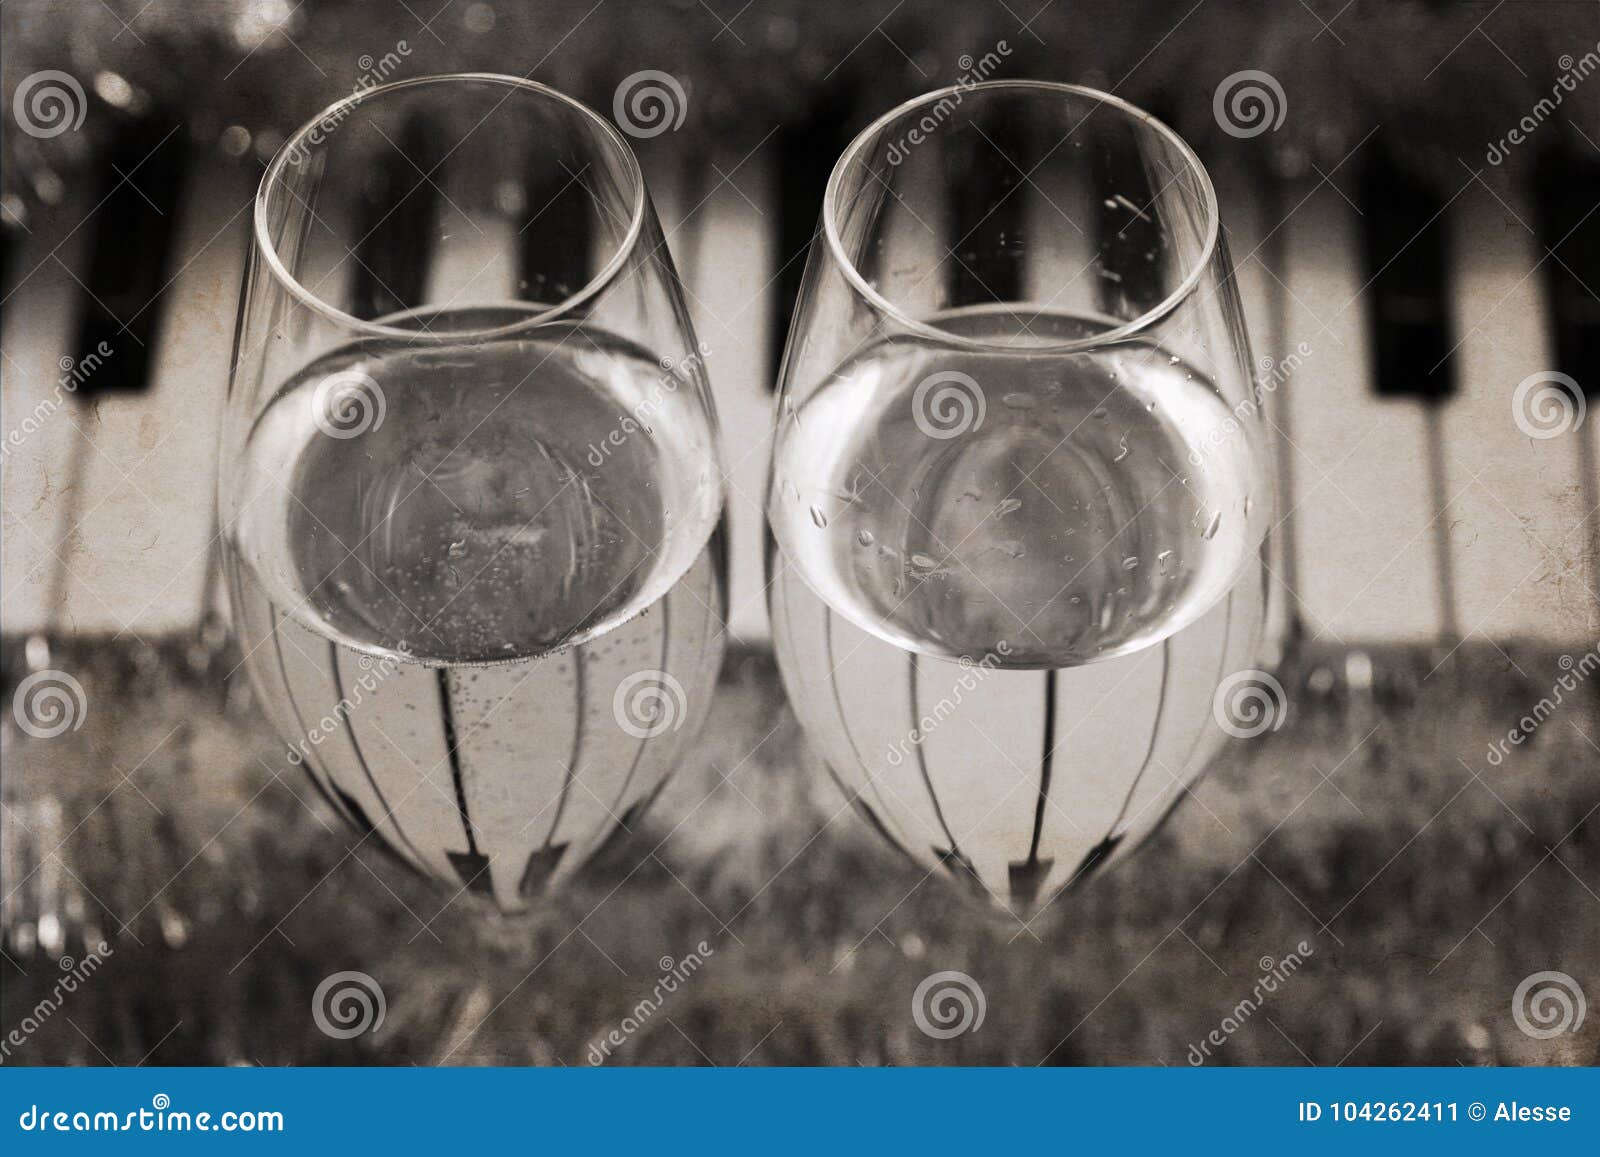 reflection of piano keys in two wine glasses, pianoforte